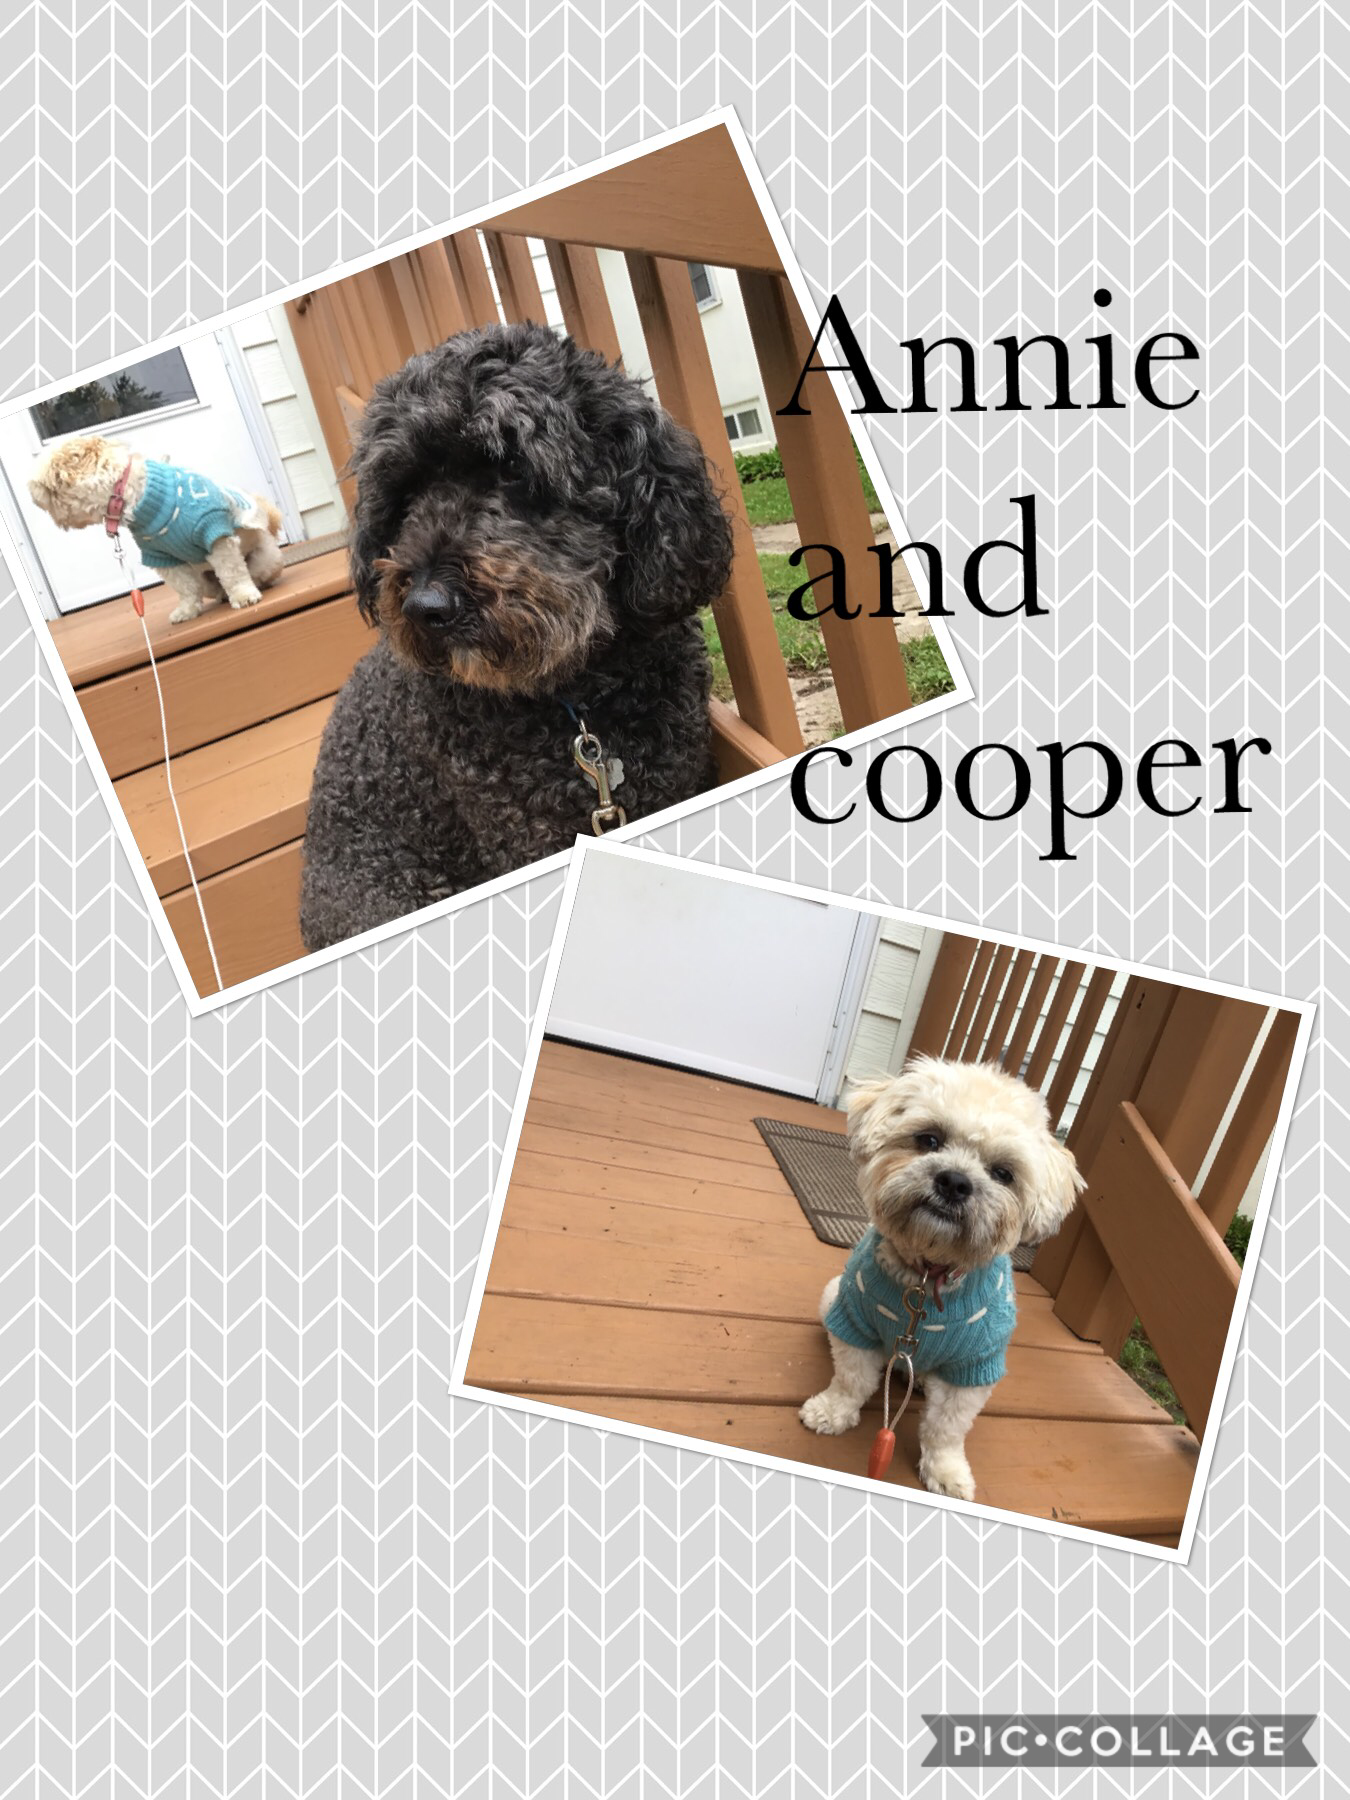 Annie and cooper❤️❤️❤️